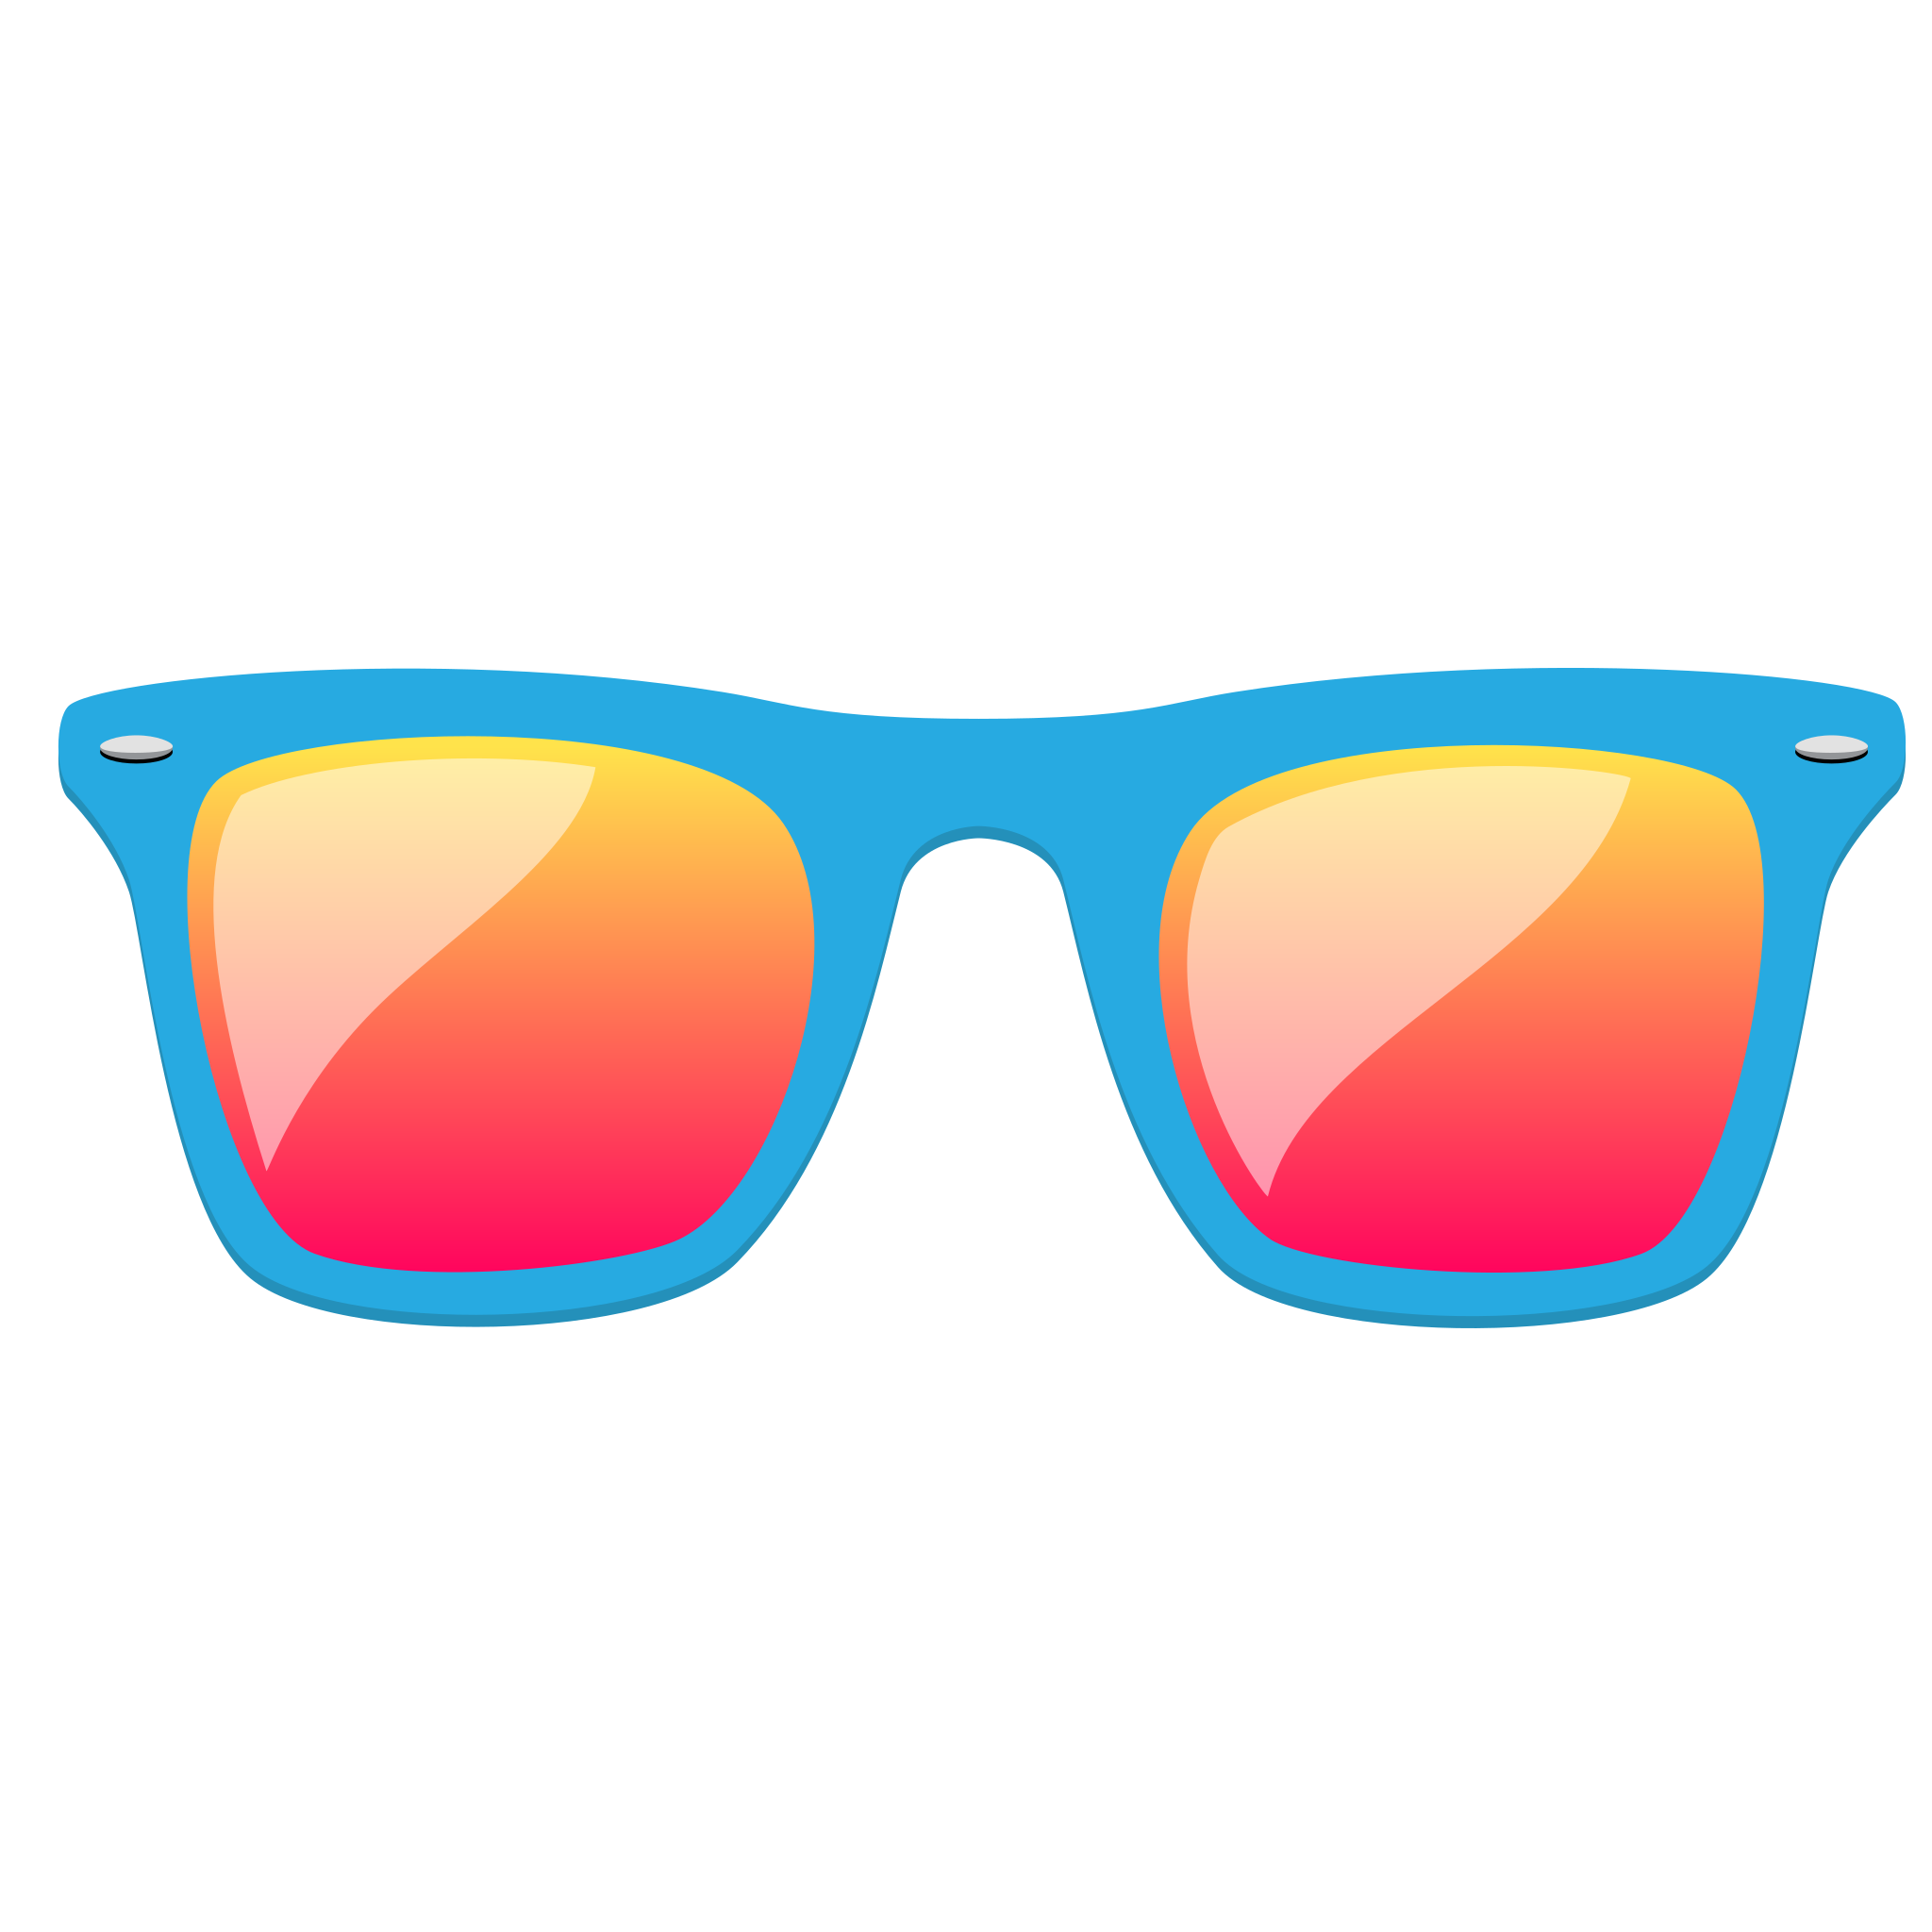 Sticker Goggles Sunglasses Eyewear Sunglass Free Download Image Clipart